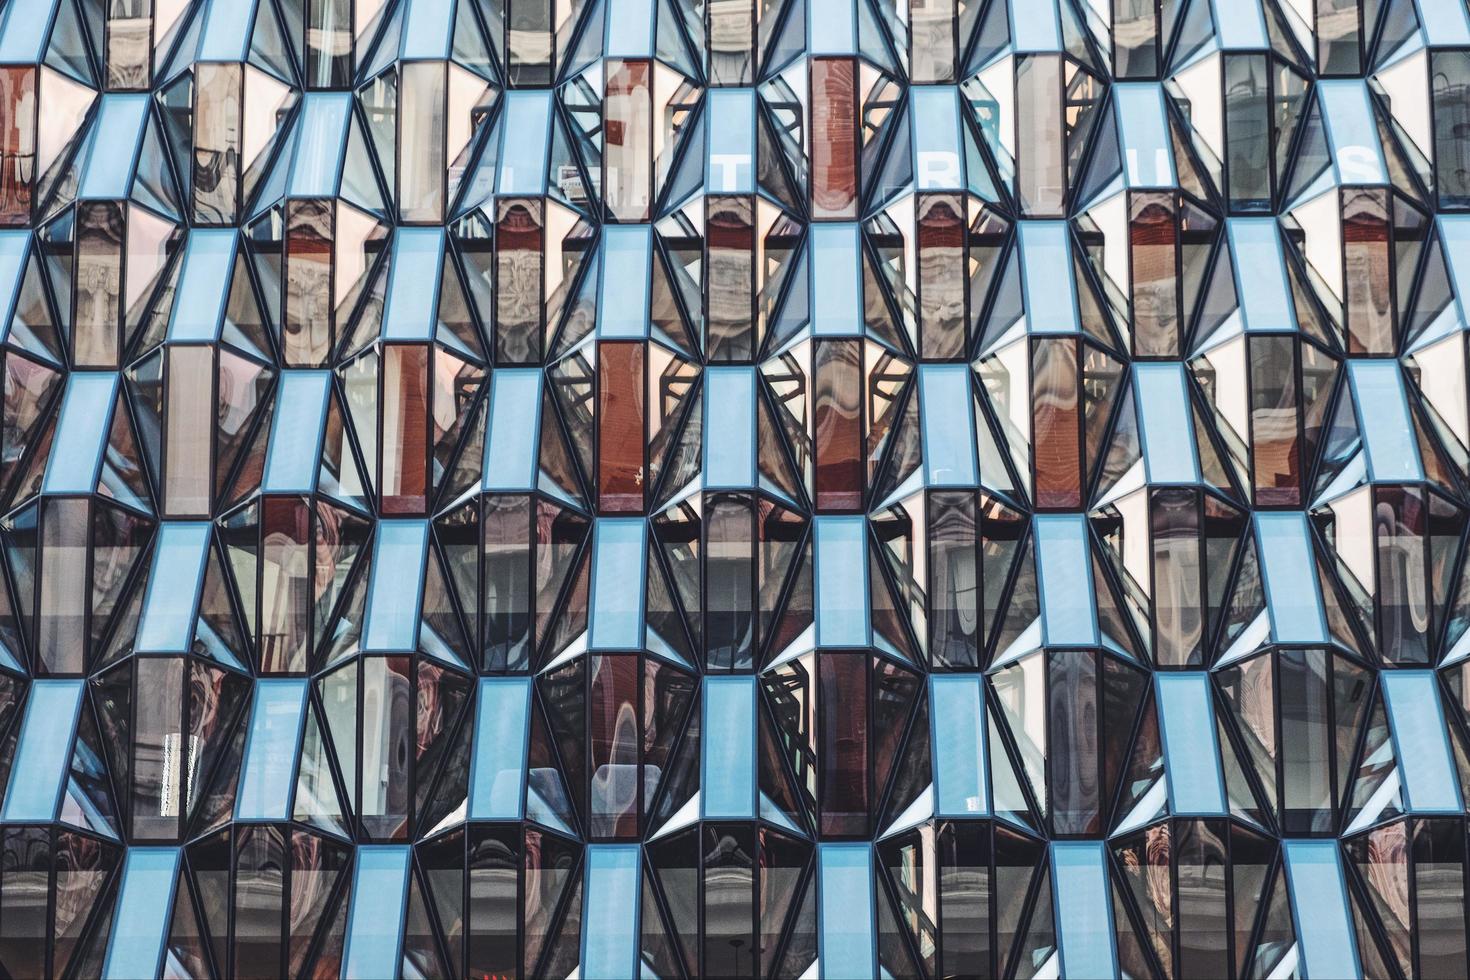 london, Storbritannien, 2020 - arkitektonisk byggnad med glasfönster foto